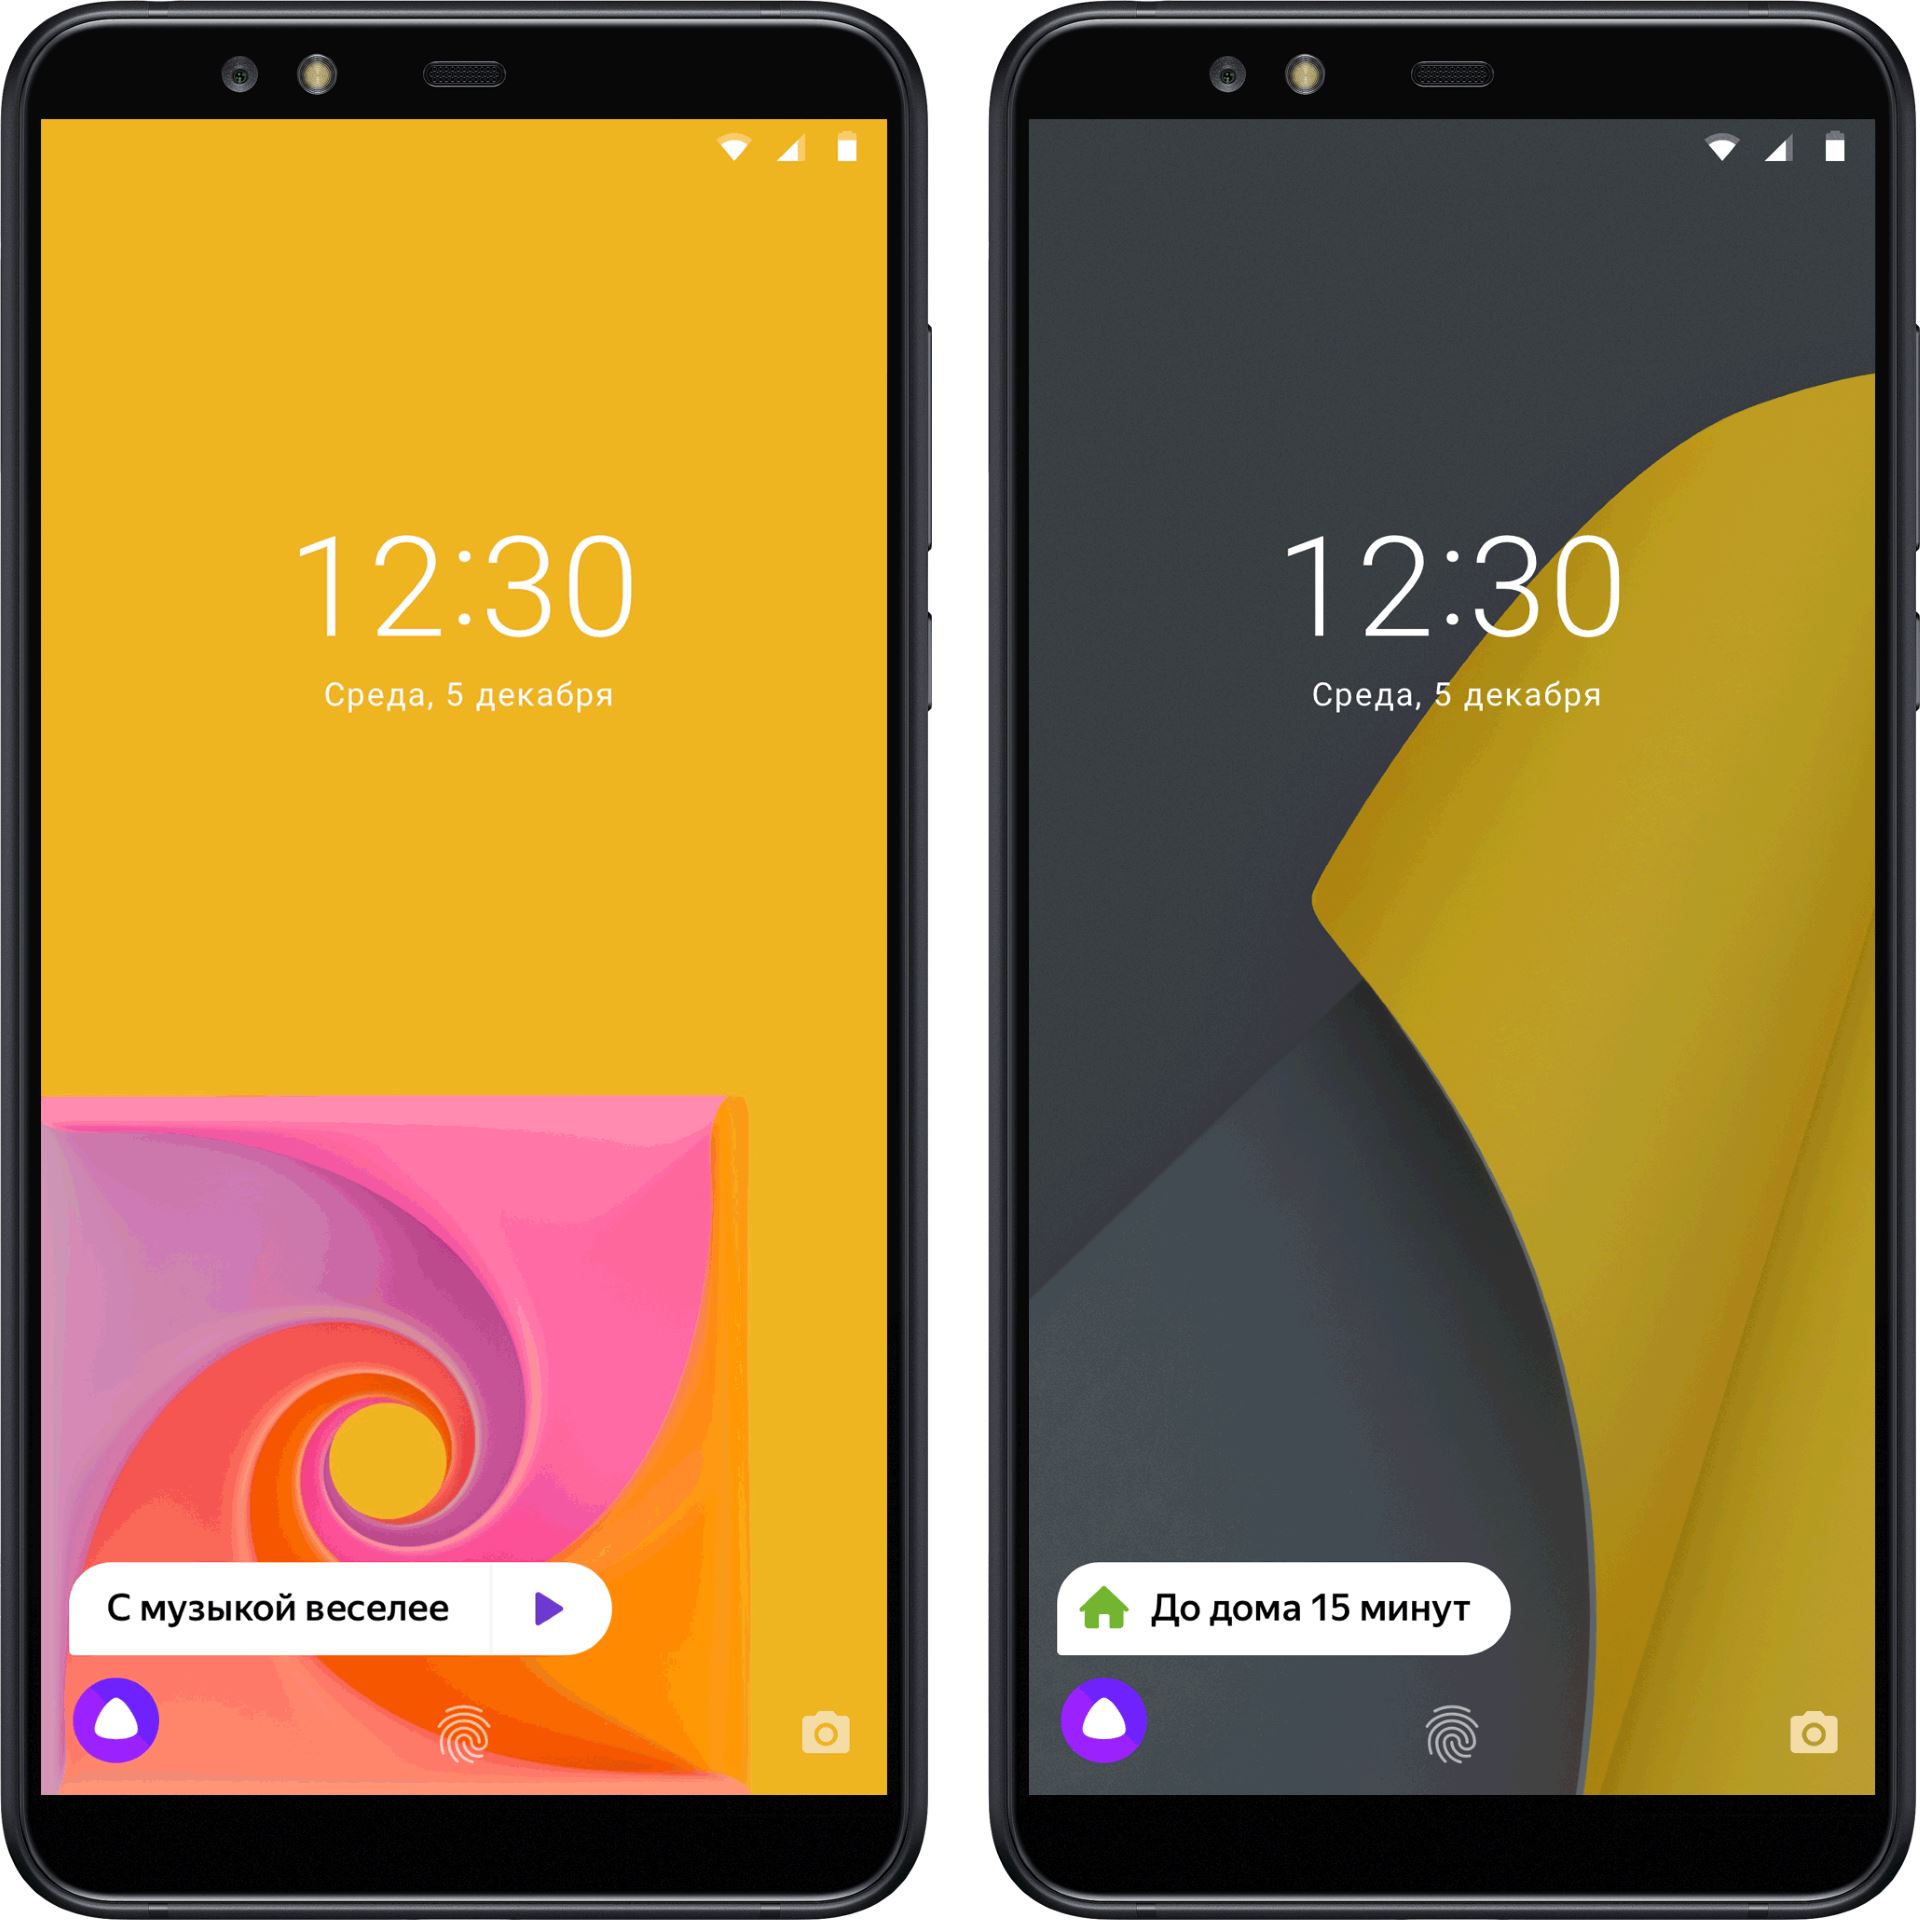 Яндекс Телефон представлен официально